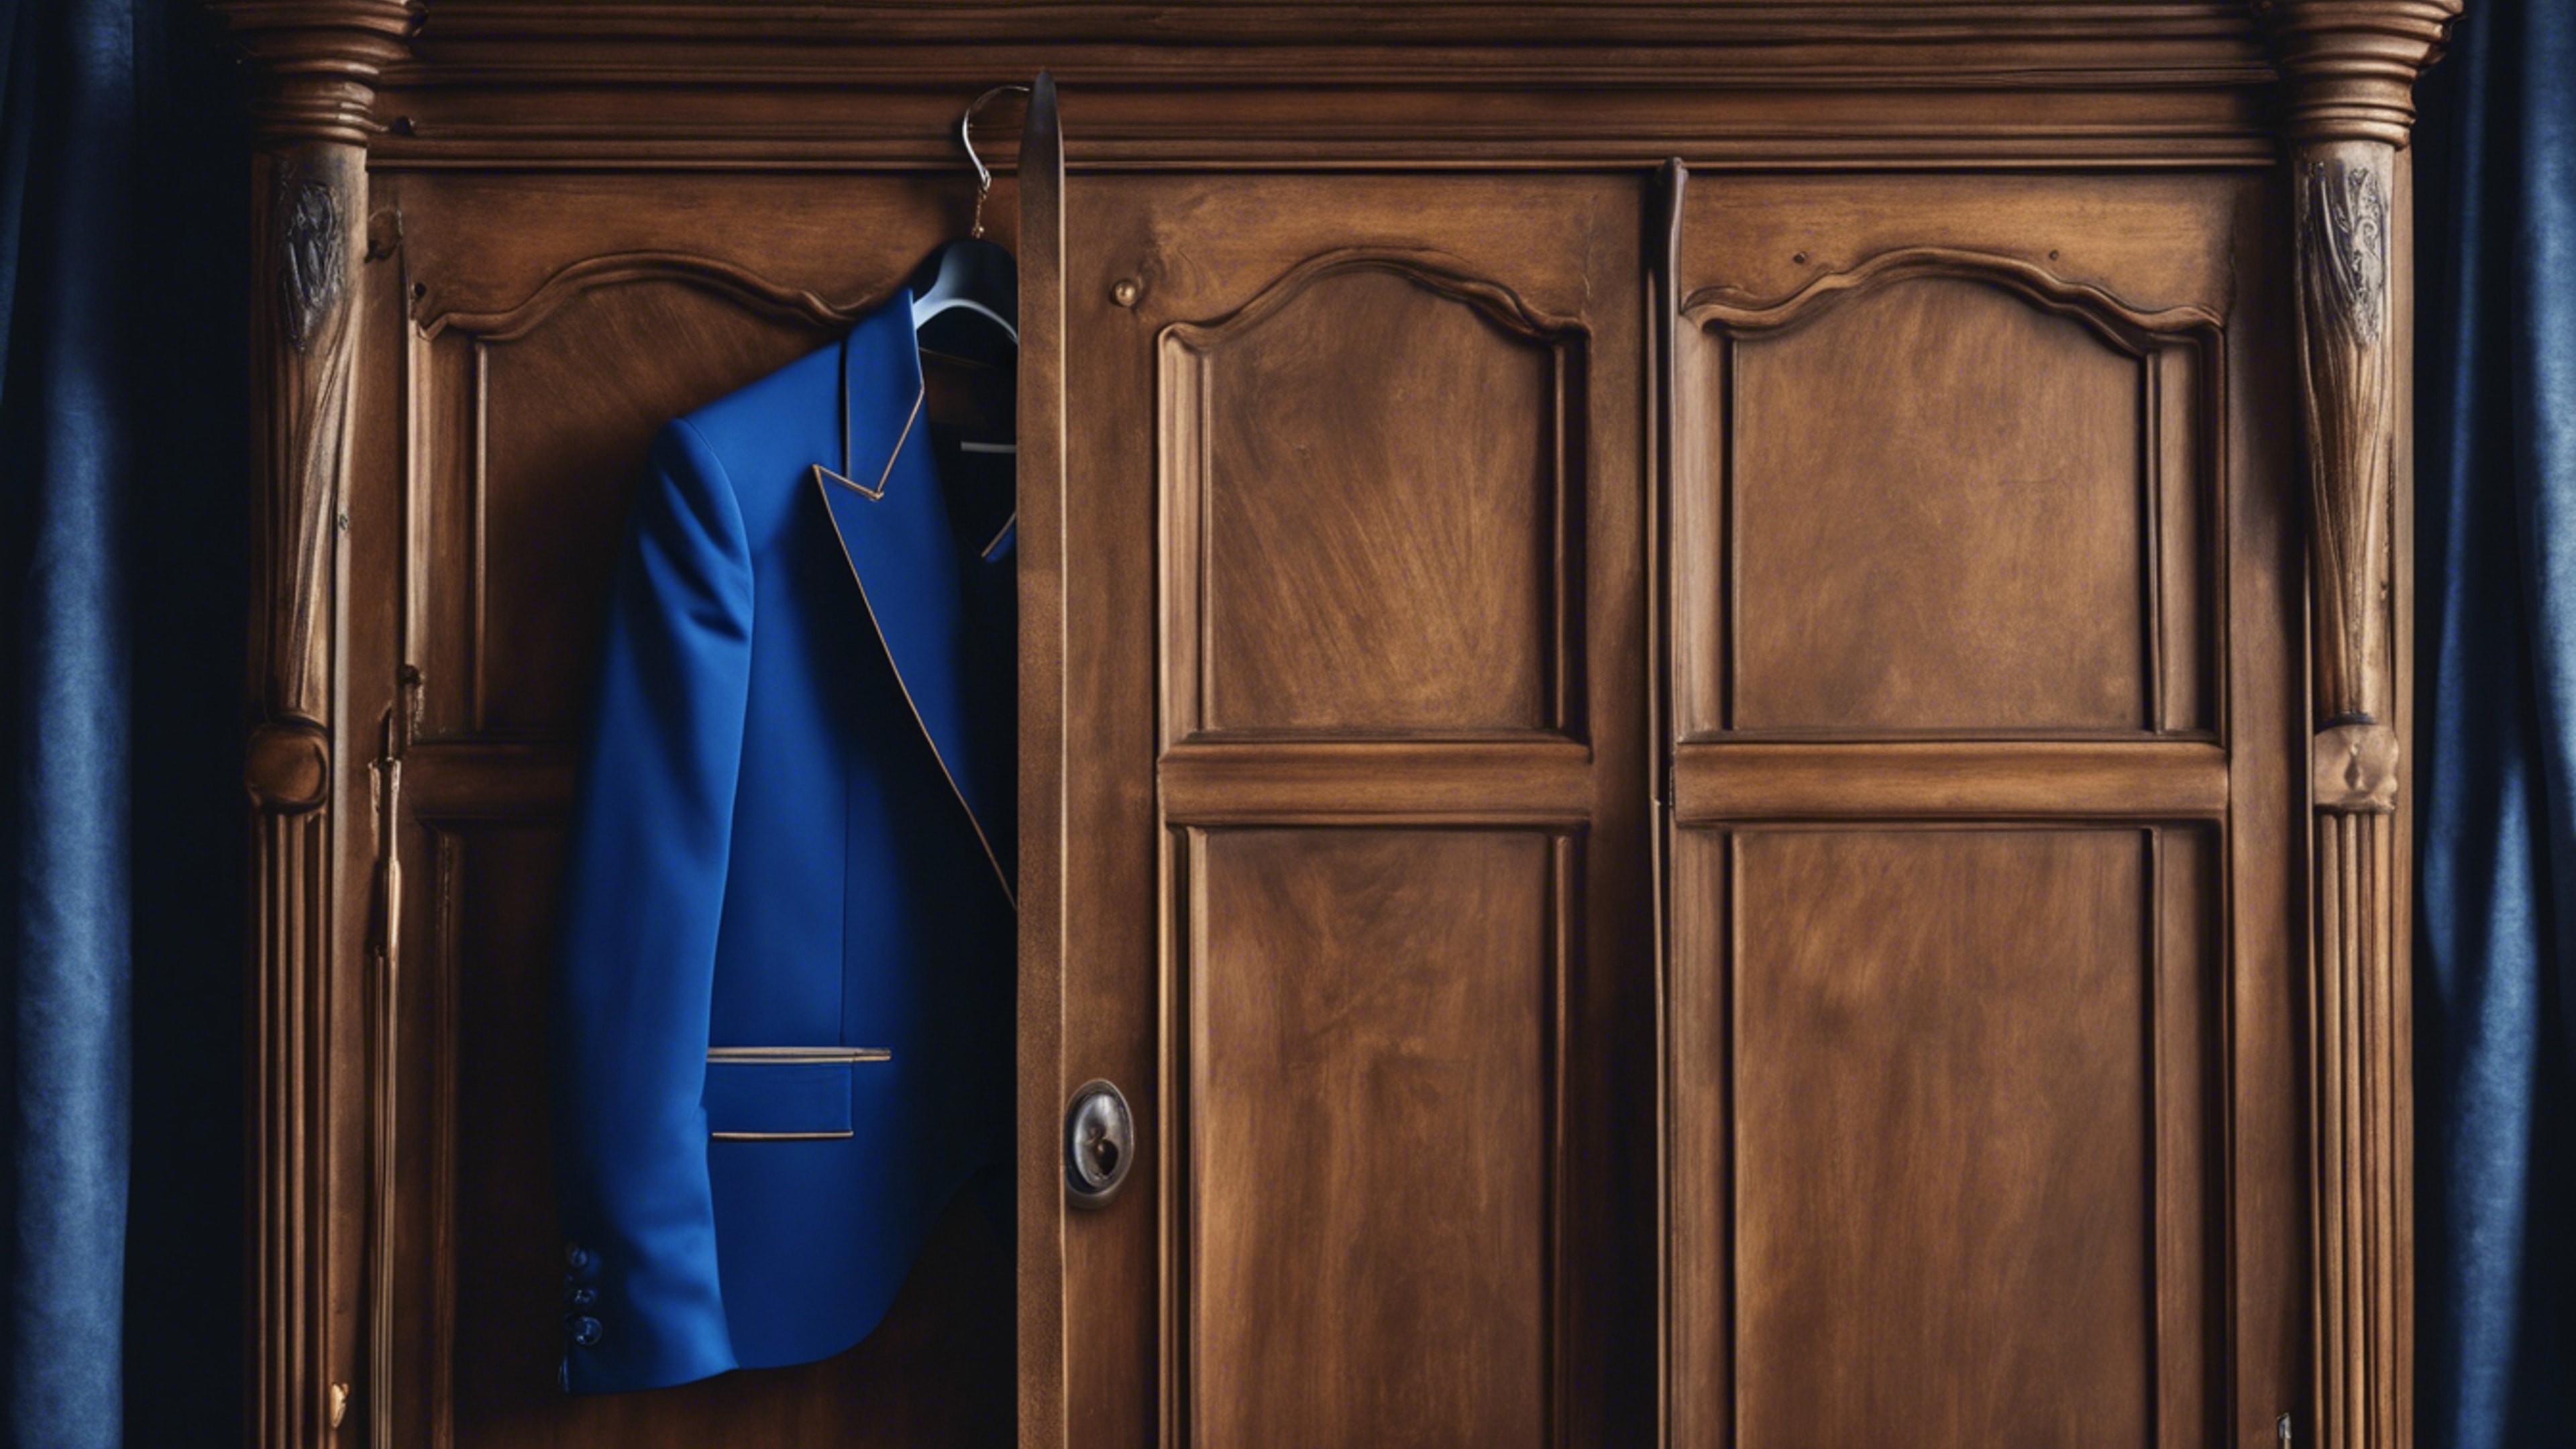 A vintage royal blue tuxedo hanging in a classic antique wardrobe. duvar kağıdı[1e18aa866c984257b969]